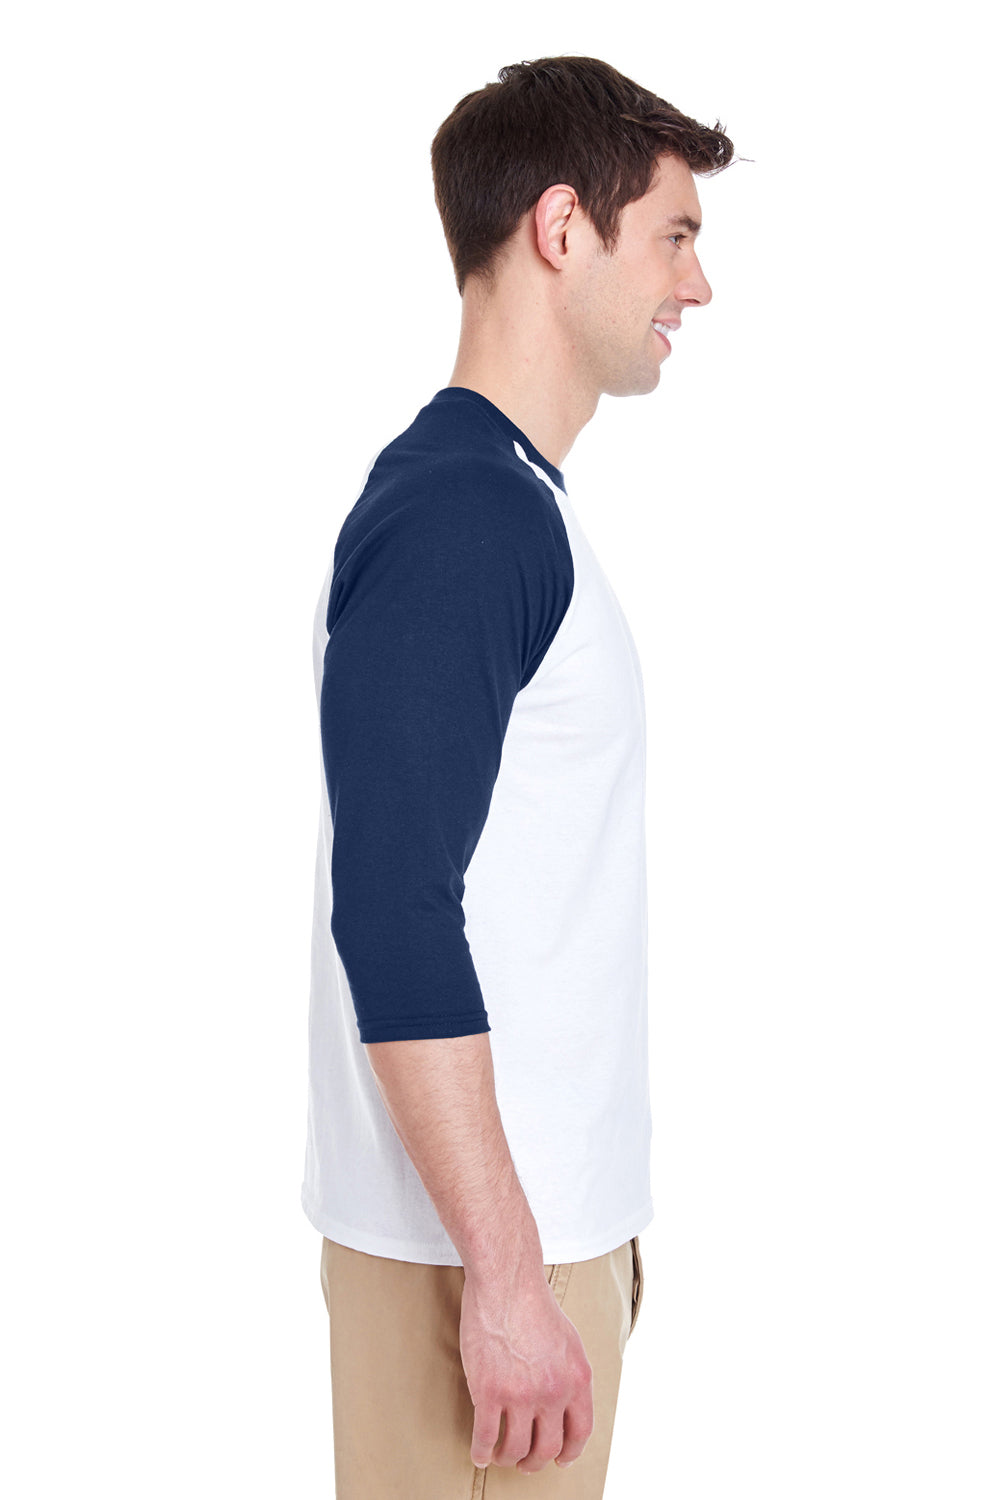 Gildan G570 Mens 3/4 Sleeve Crewneck T-Shirt White/Navy Blue Side